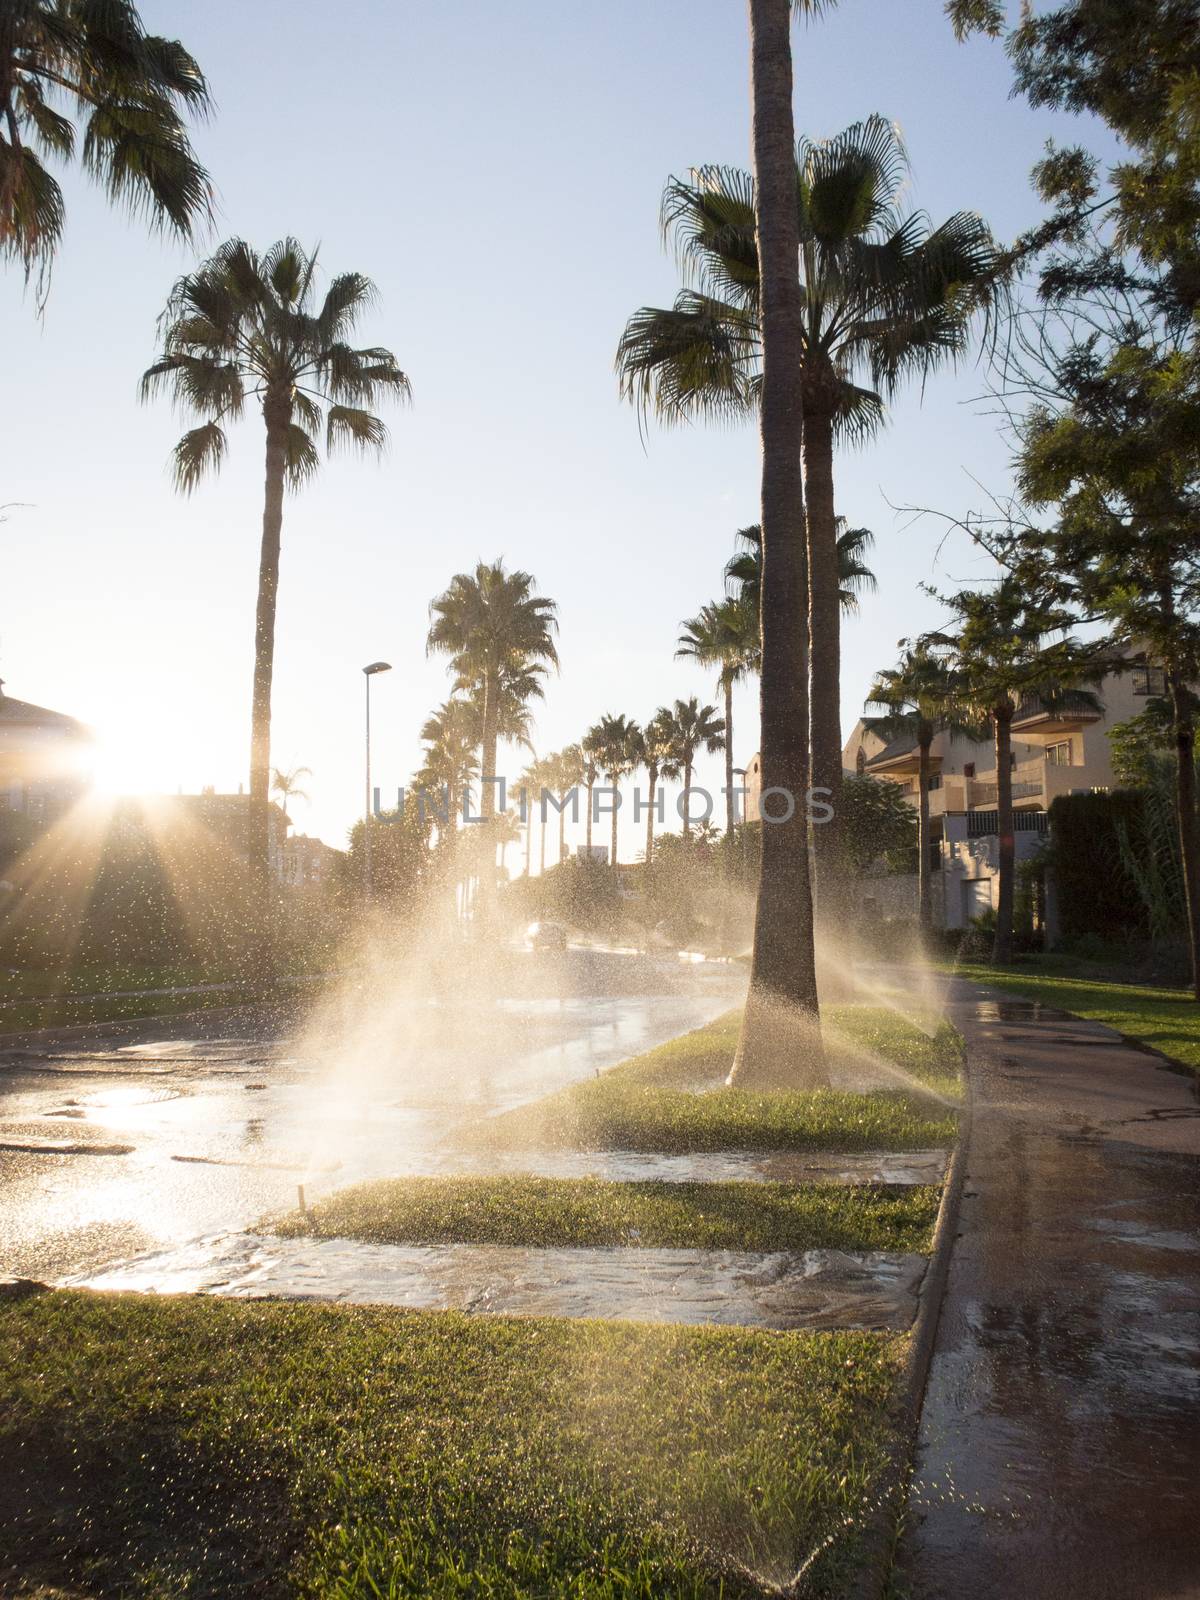 watering lawn at dawn street in Benalmadena Andalucia Spain